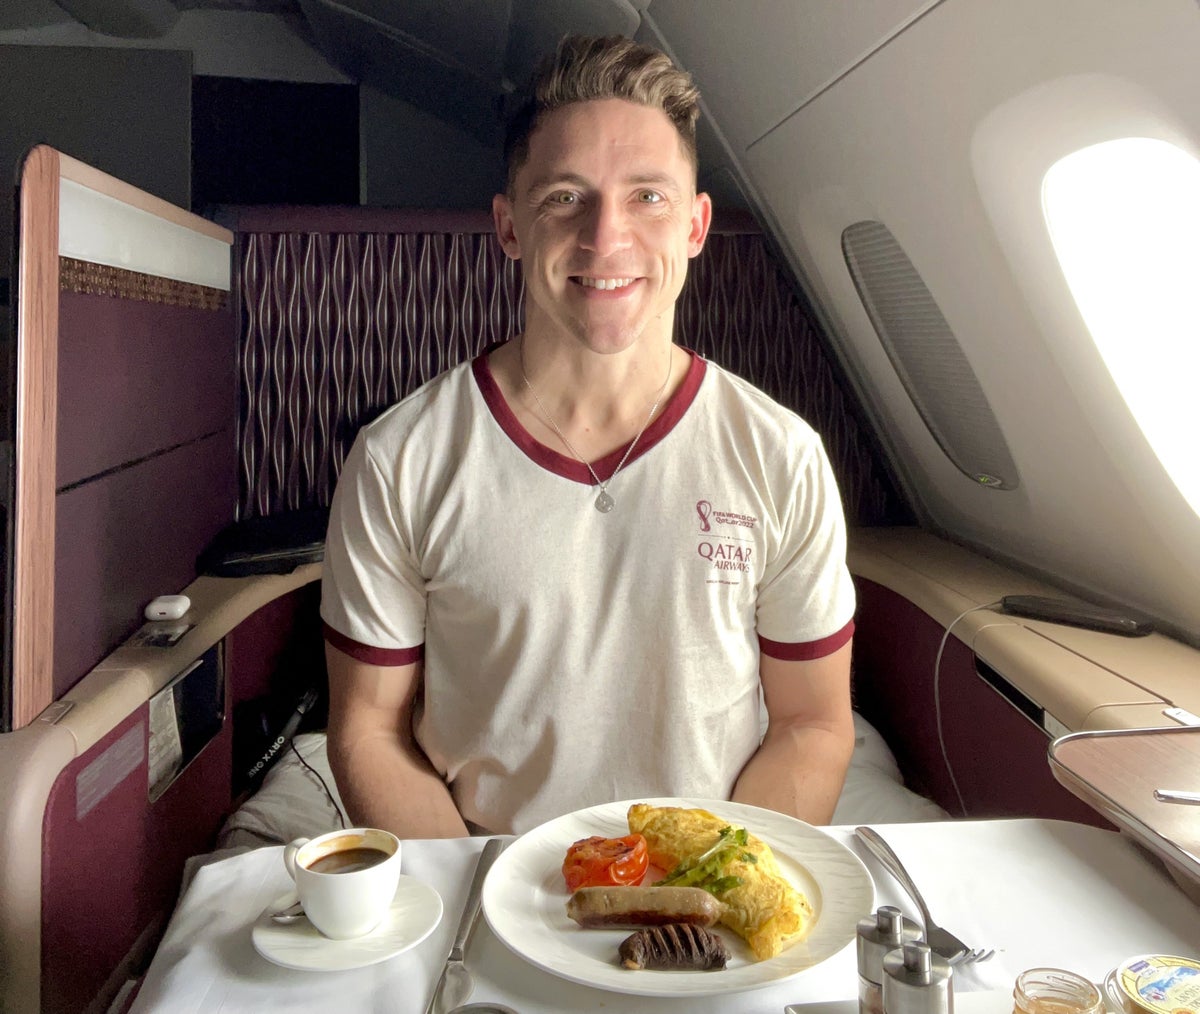 Qatar Airways Airbus A380 first class FB breakfast in bed